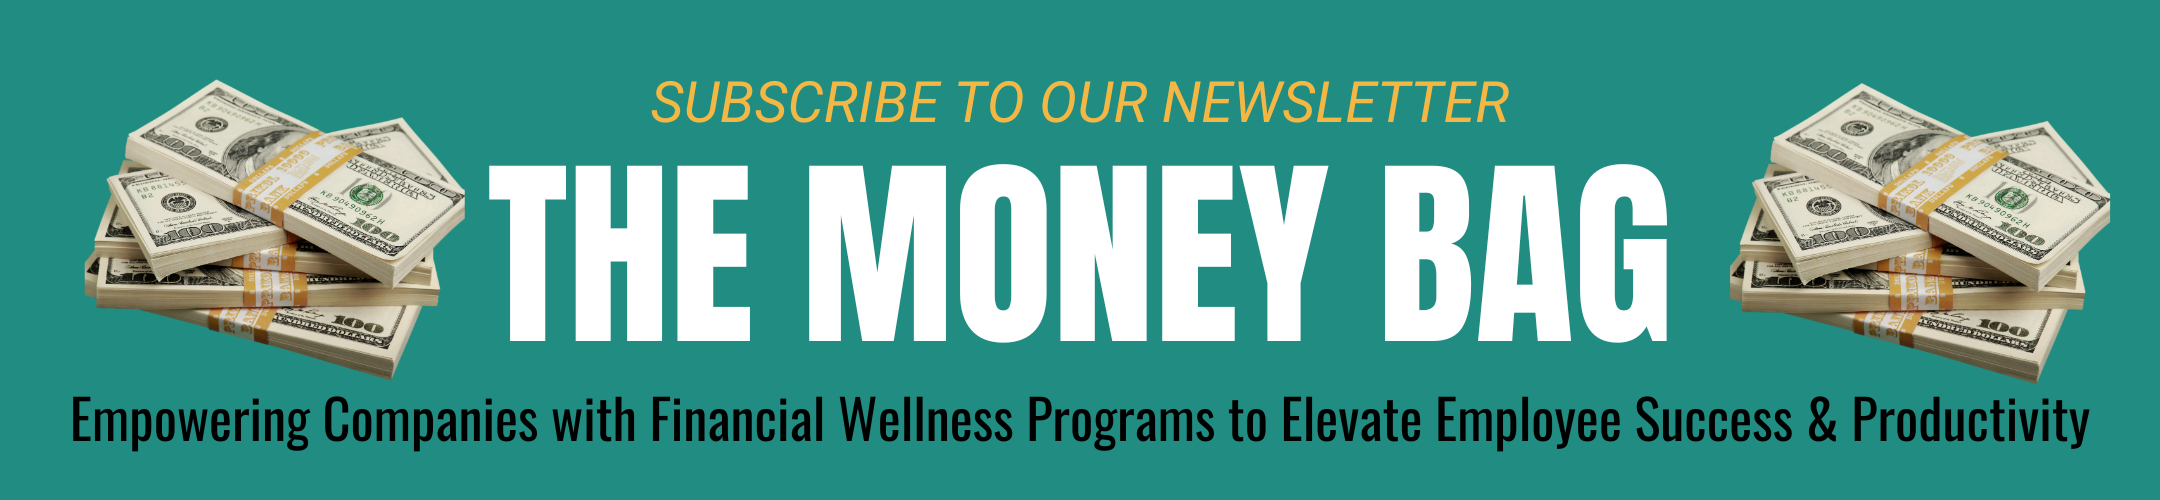 Corporate Wellness Newsletter Header Image